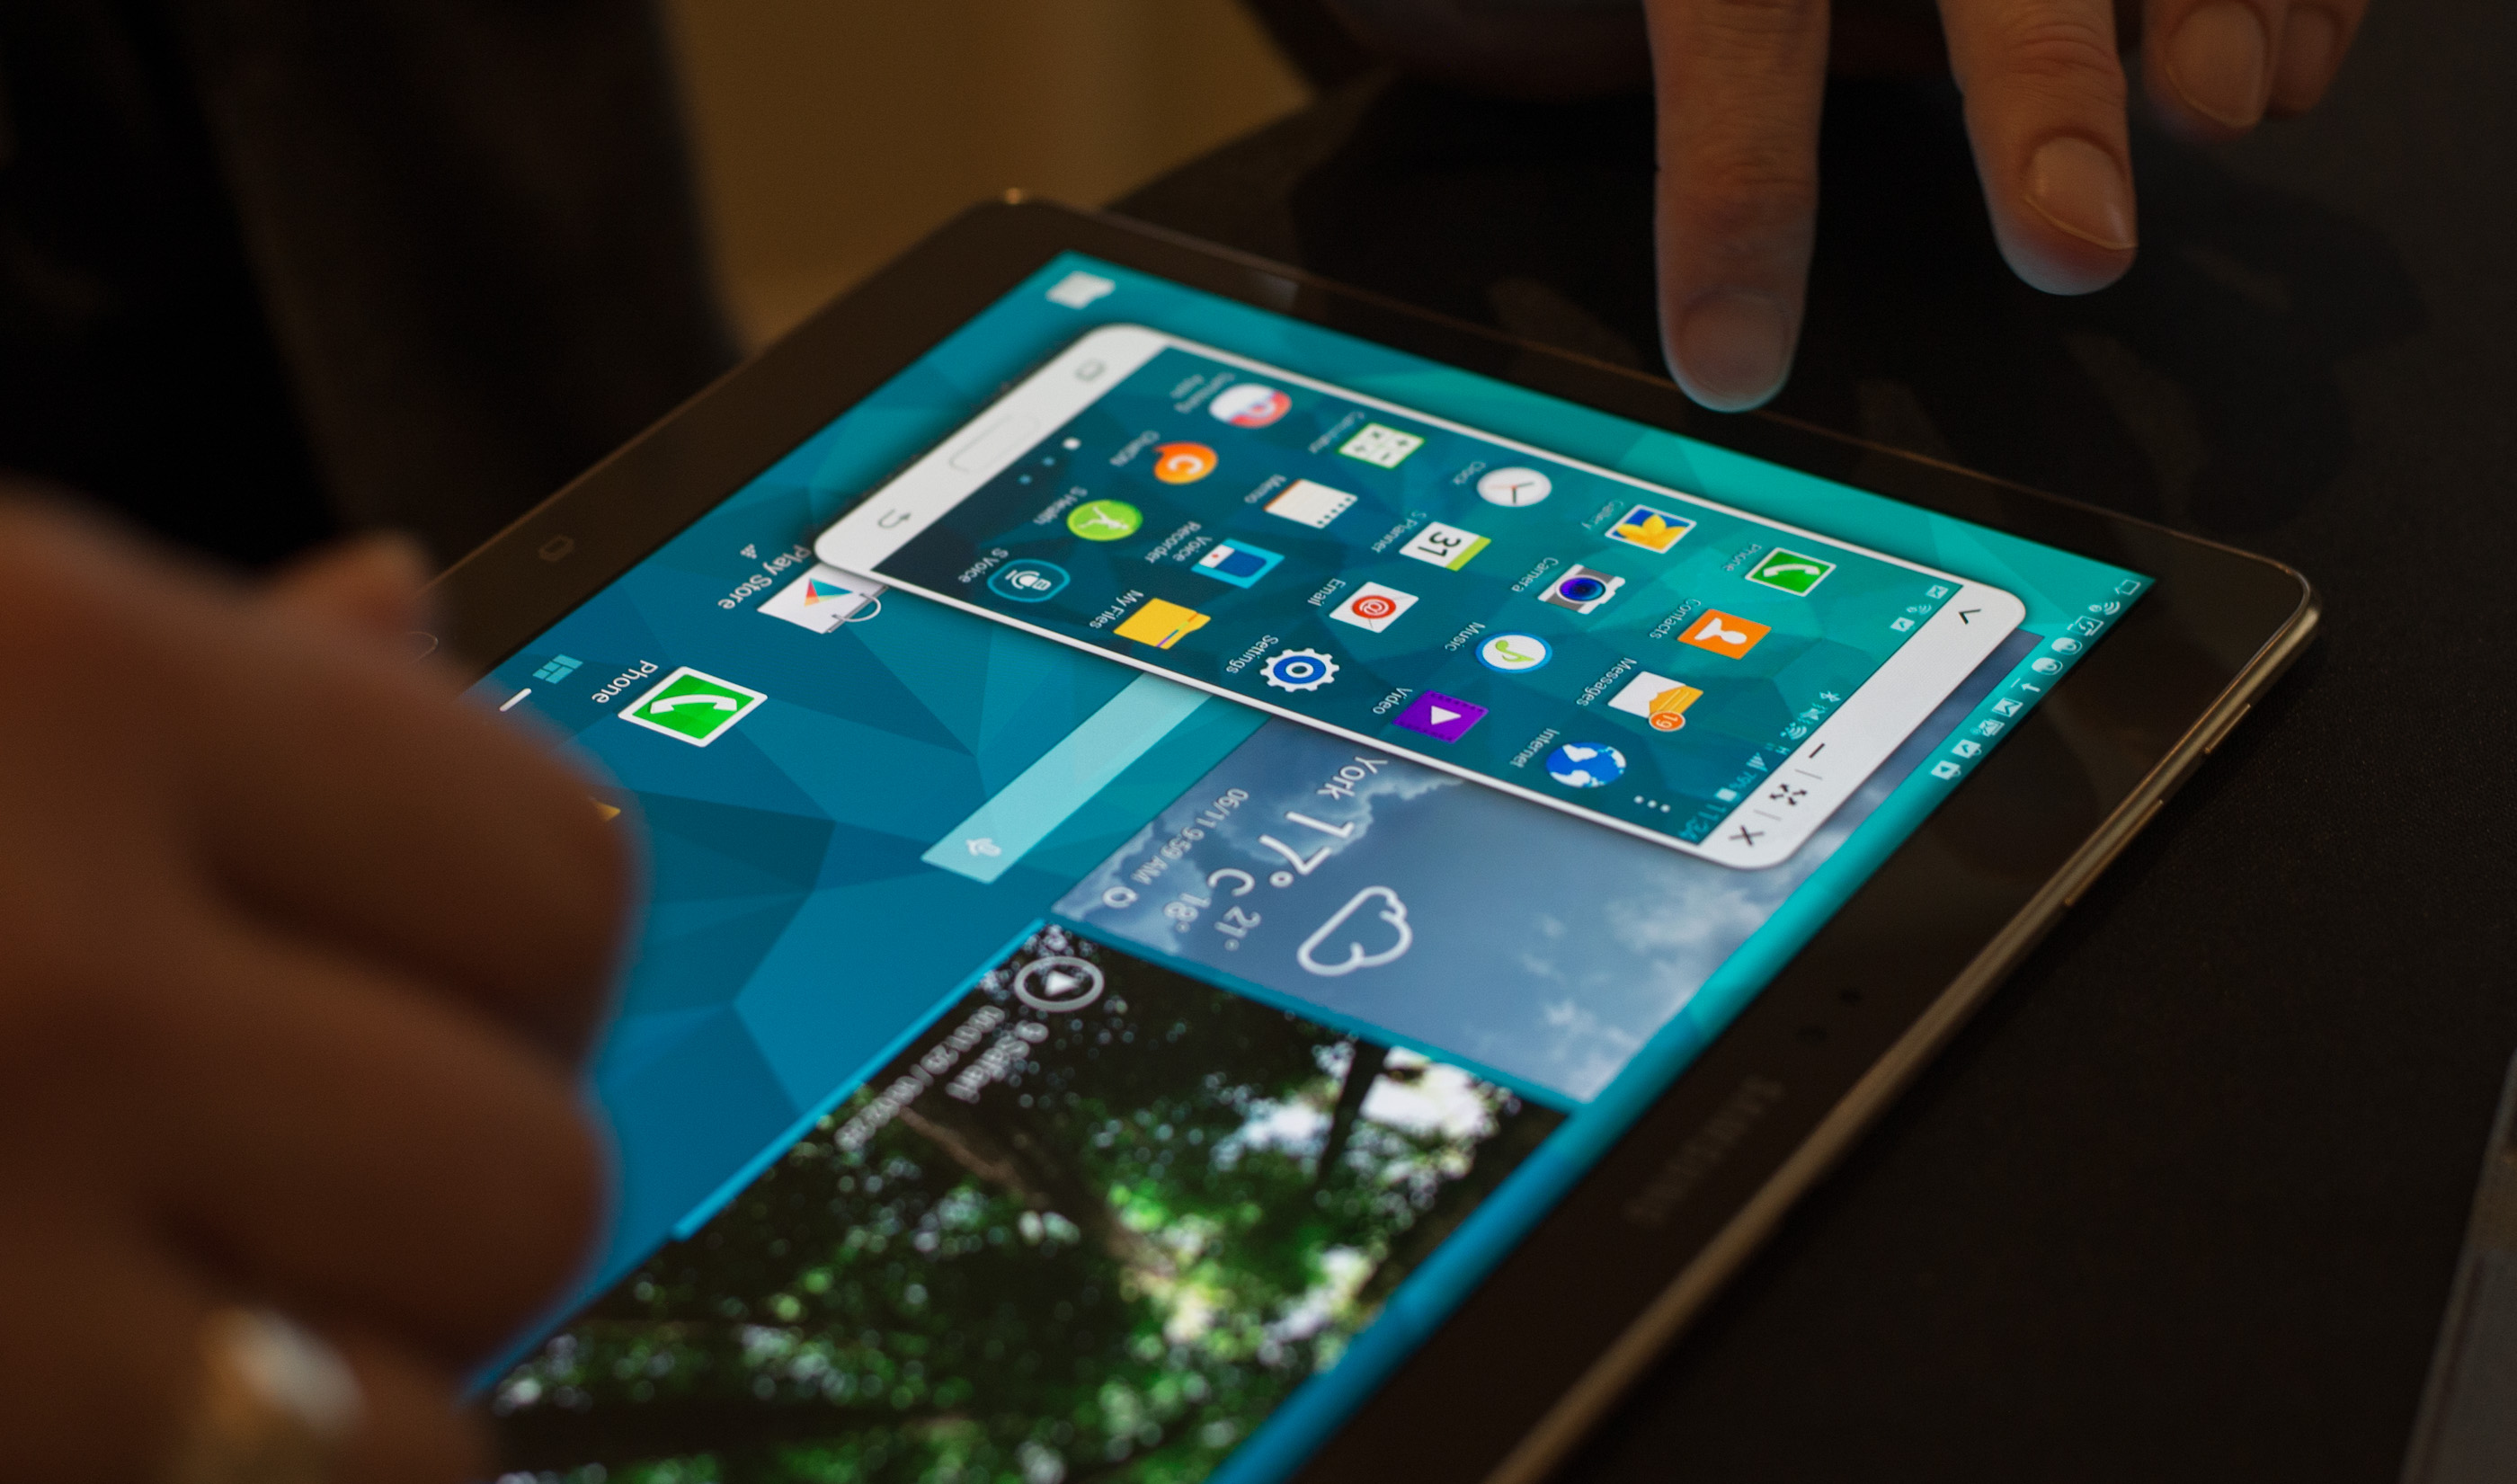 Samsung Galaxy Tab S 10.5-Inch Tablet (16 GB, Dazzling White)